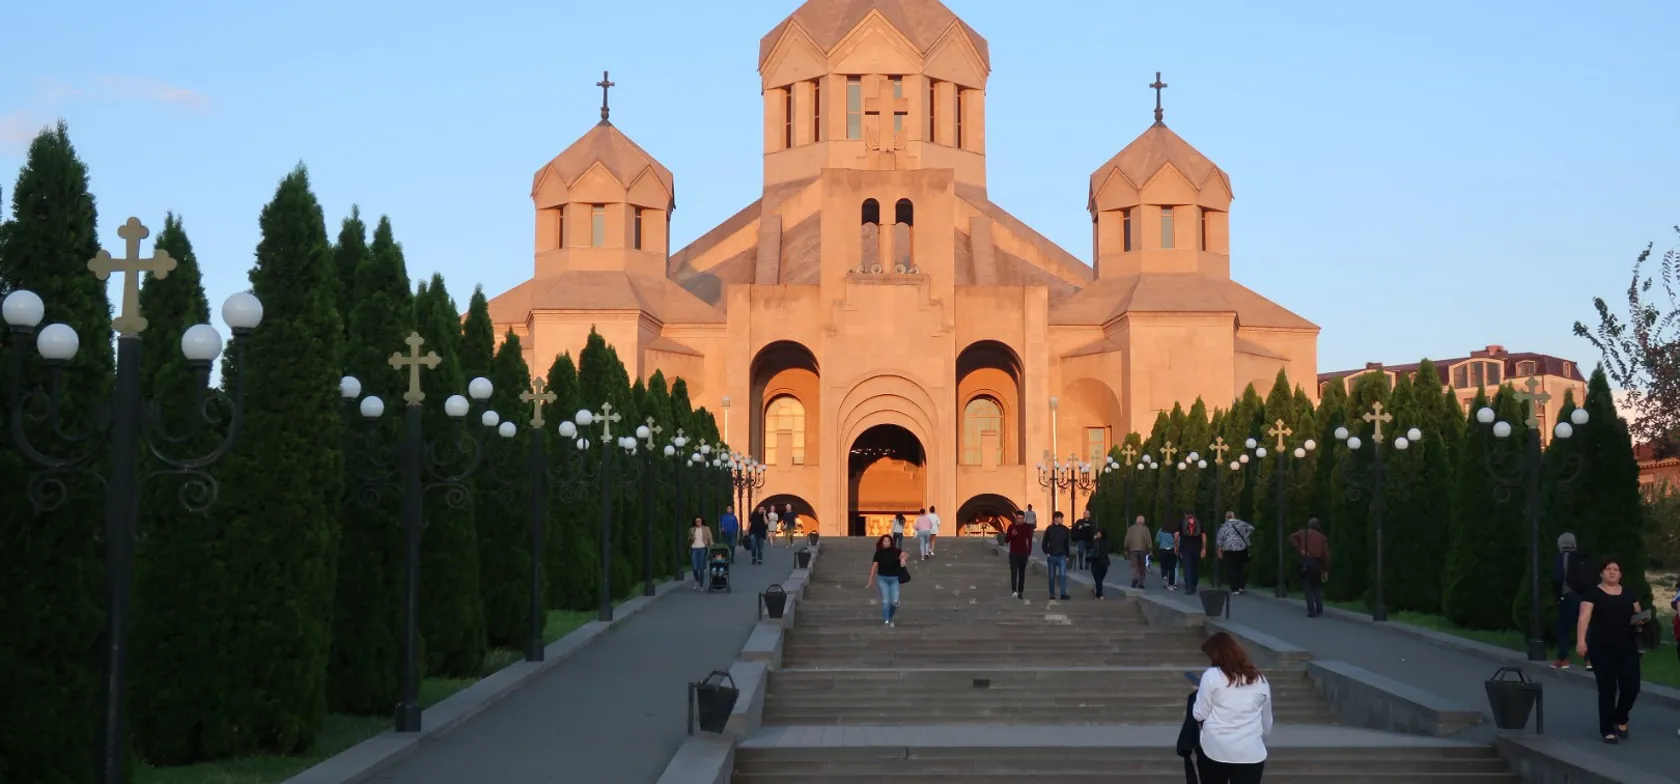 Sankt Gregorius katedralen i Yerevan. Foto Thomas Sørensen